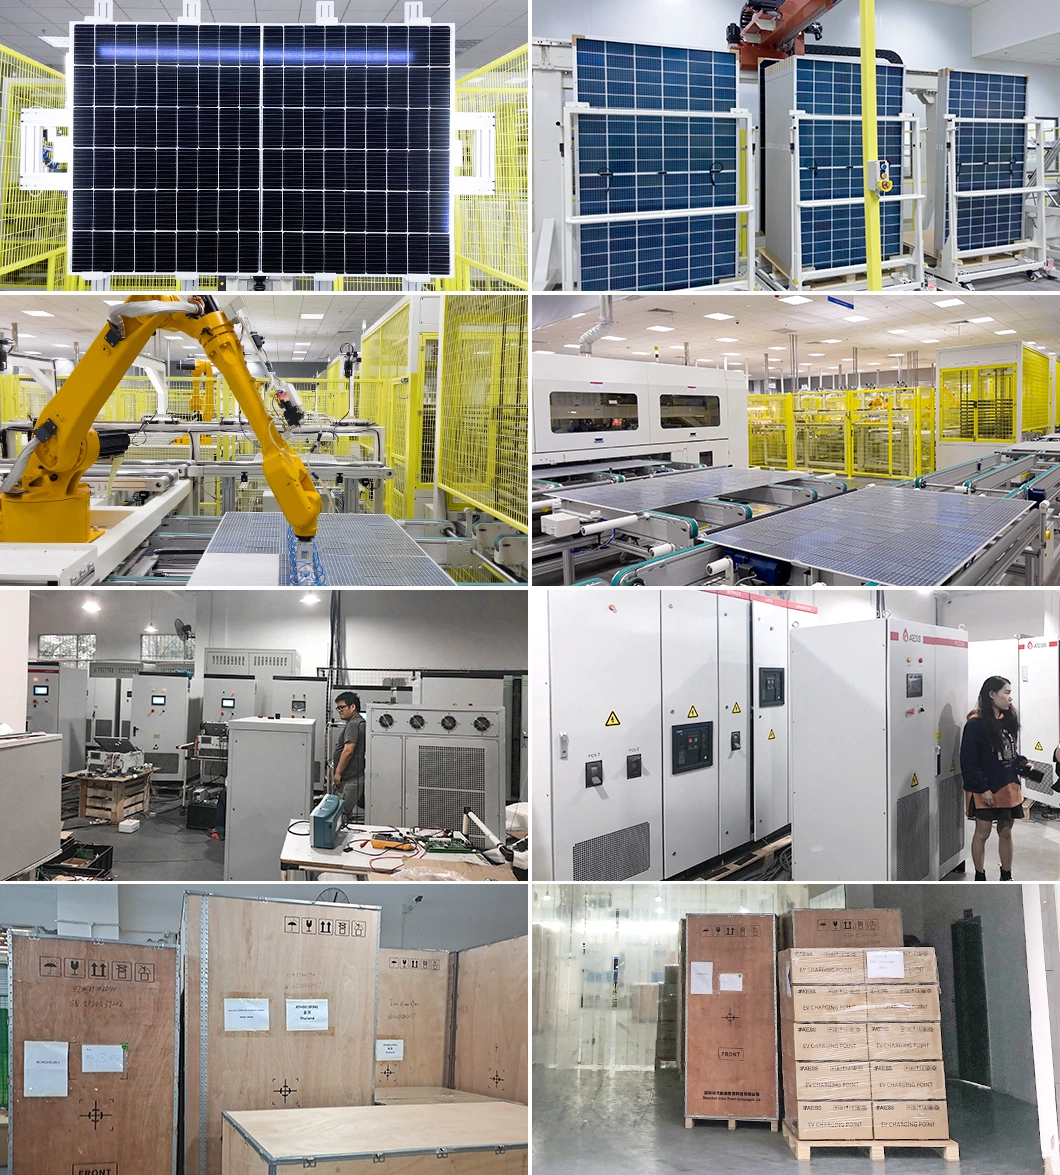 Sunpal Hybrid Solar Power System 40kw 45kw 50kw Solar Solution Full Package